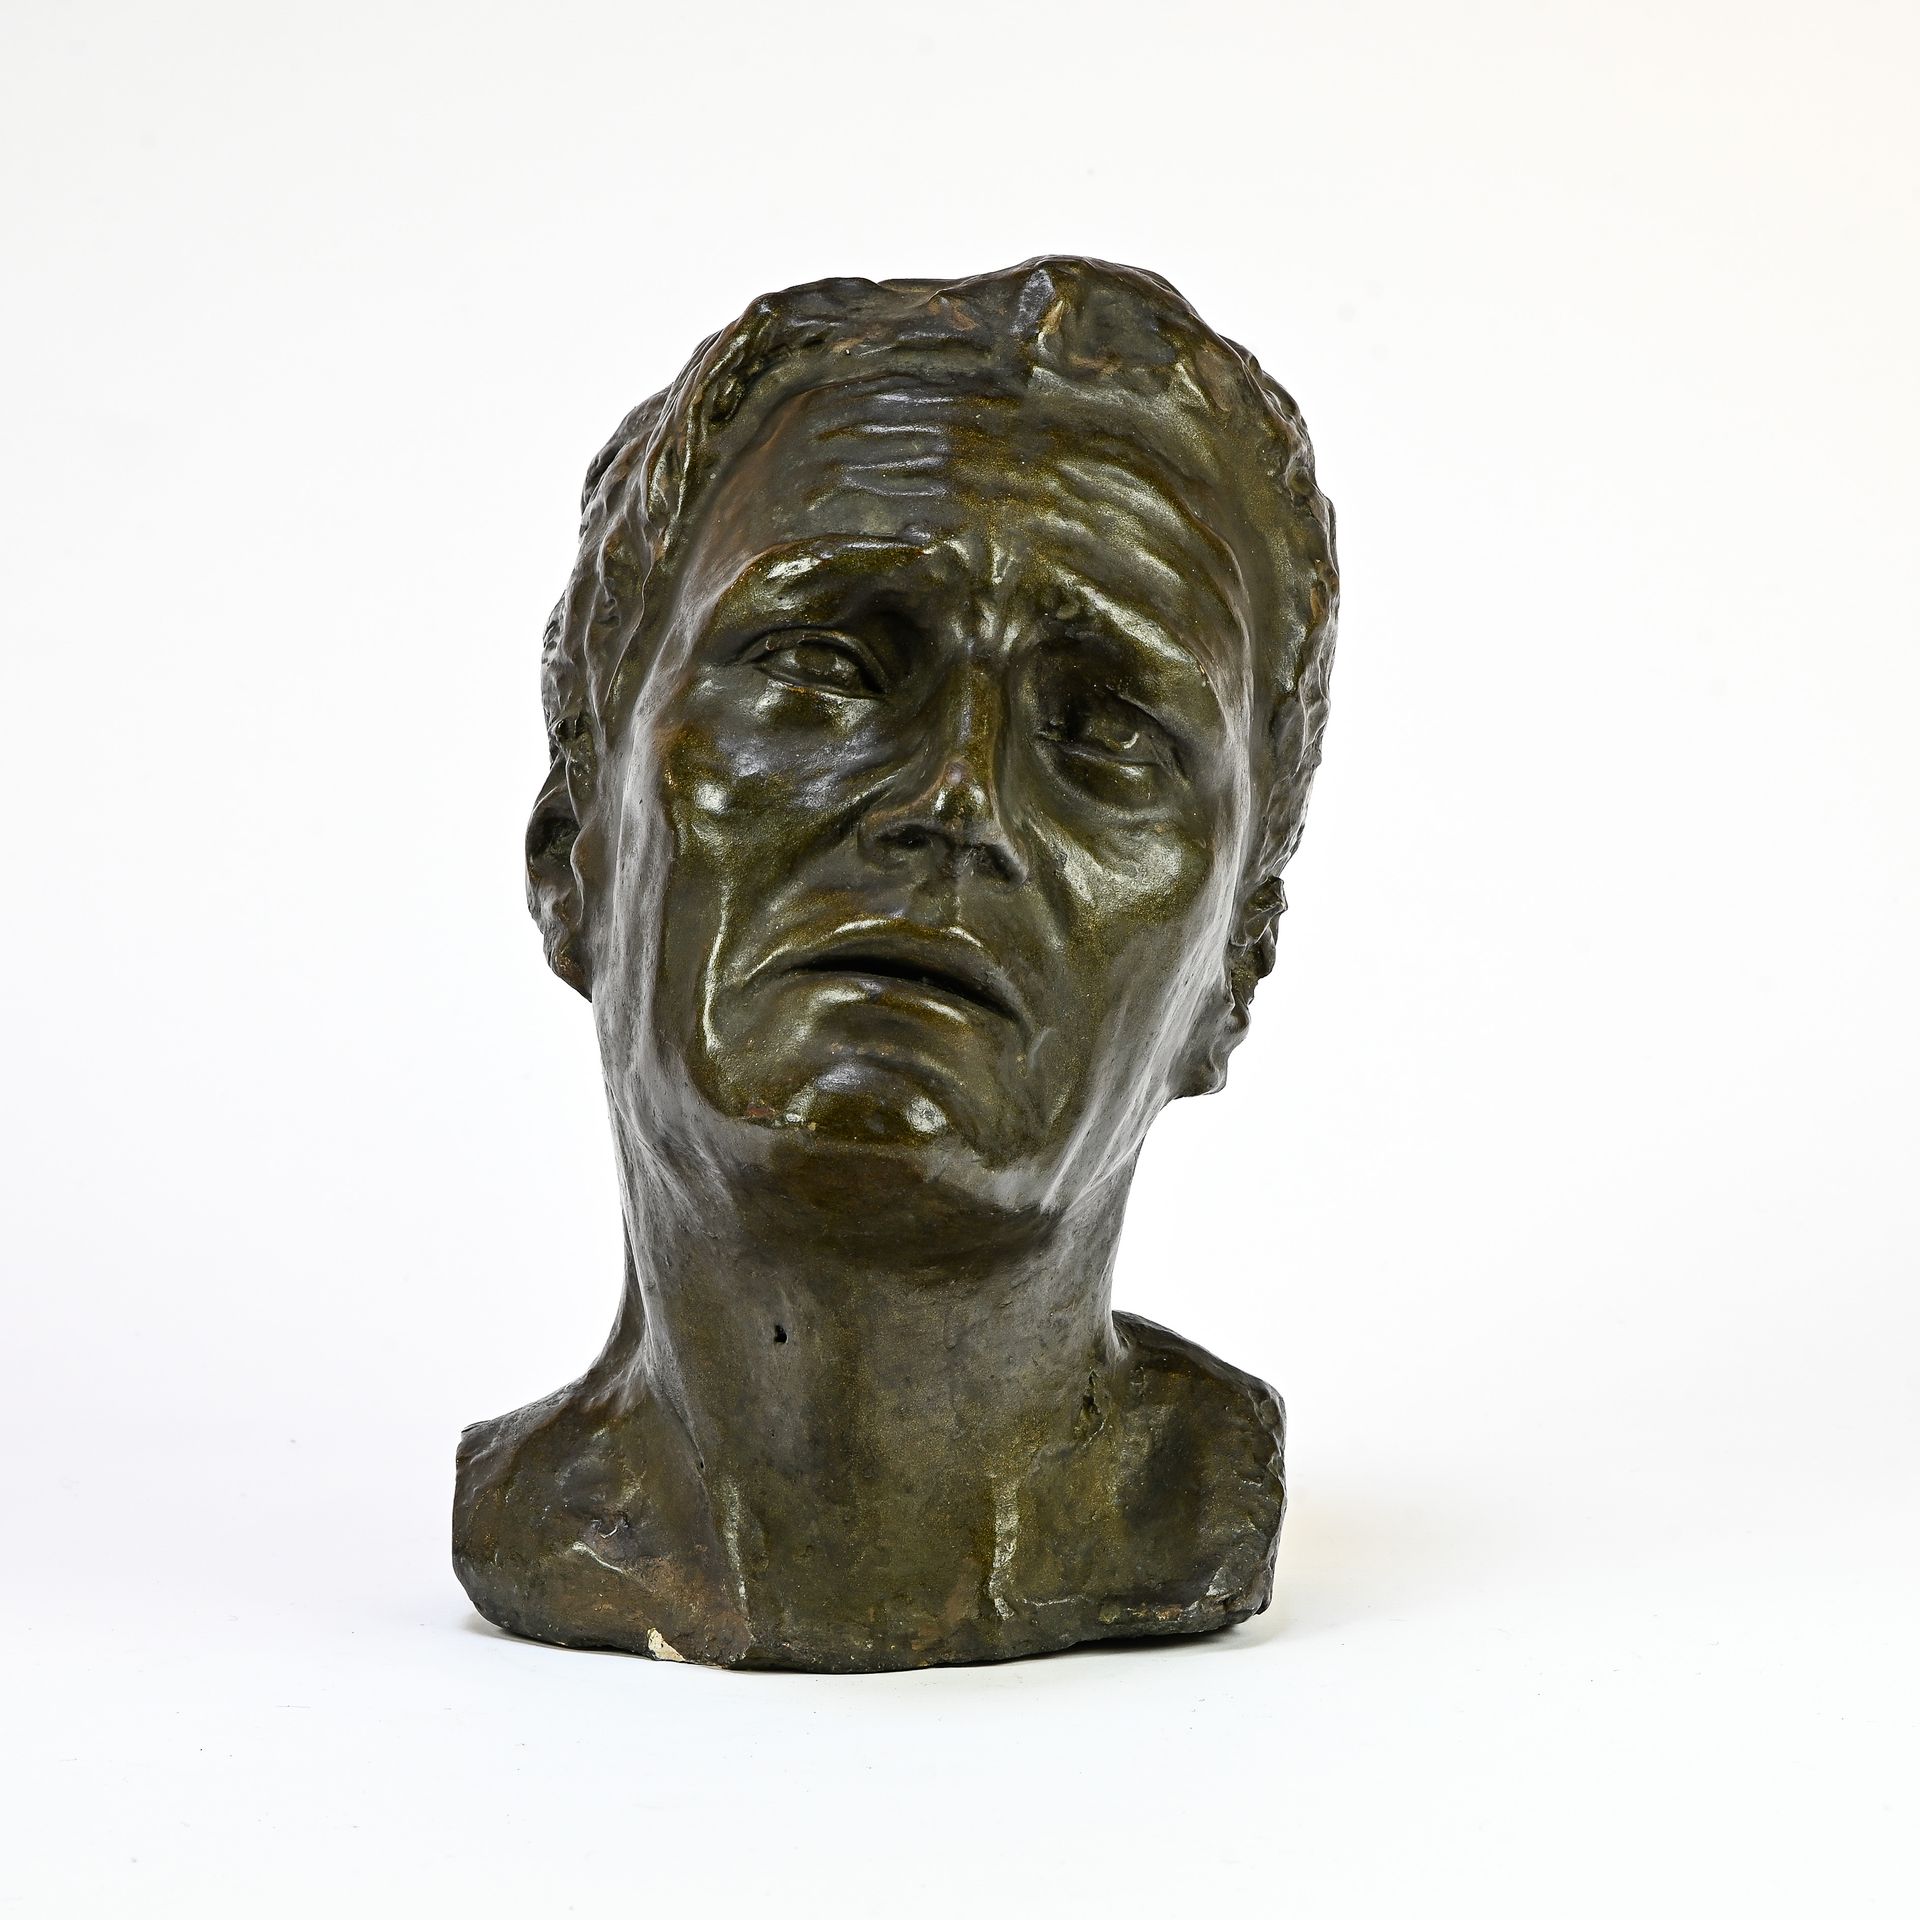 Tête d'homme Man's head

20TH CENTURY SCHOOL

Weathered plaster sculpture, marke&hellip;